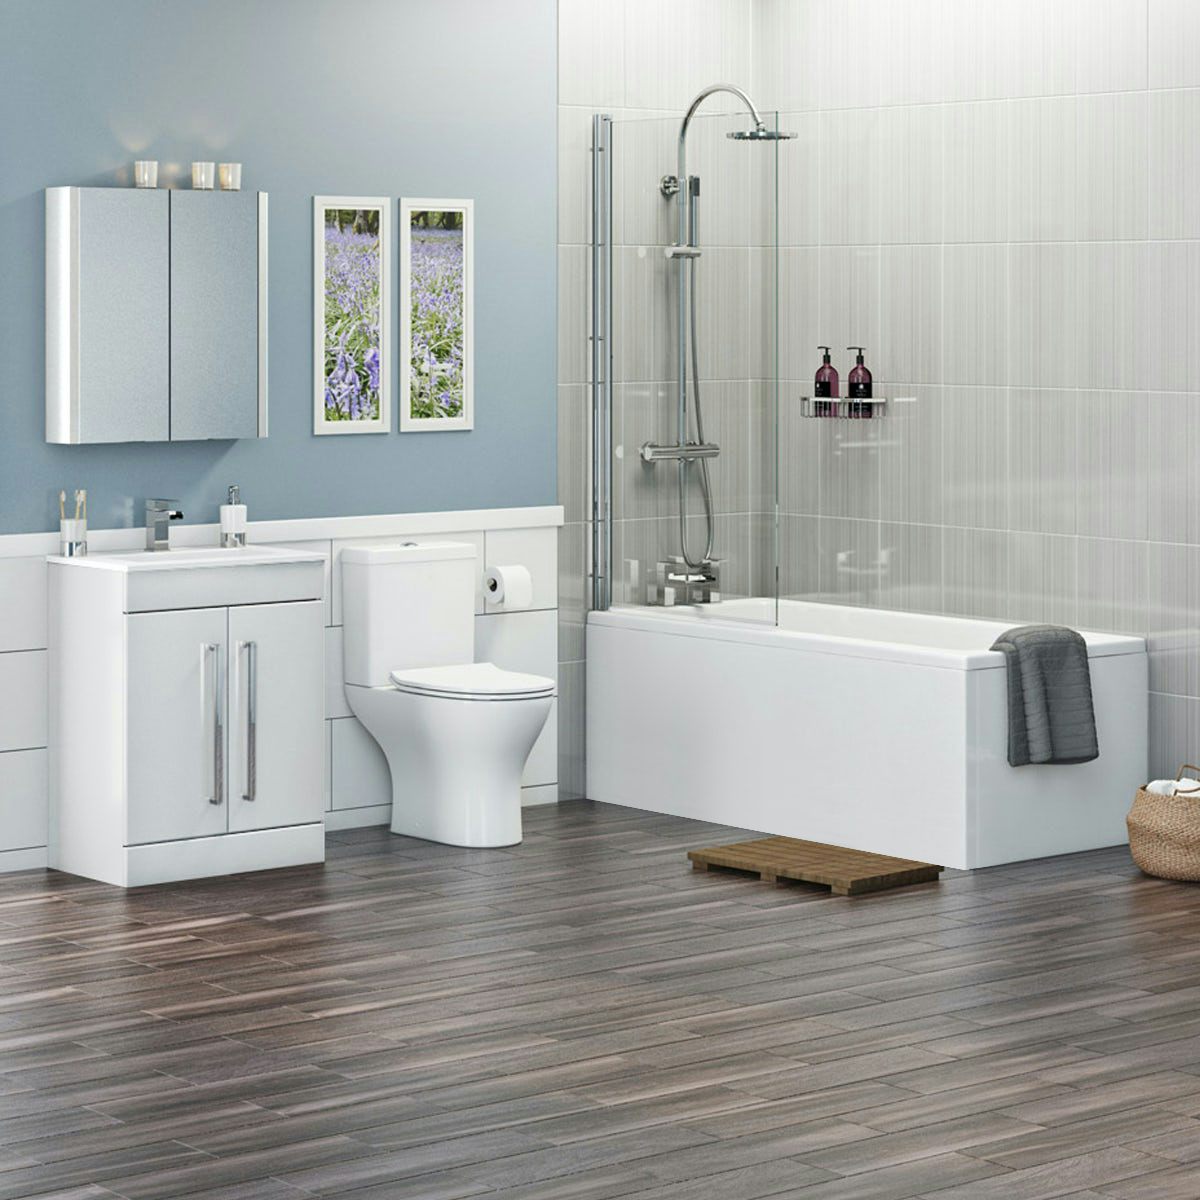 Orchard Derwent round complete bathroom suite with straight shower bath, shower and taps 1800 x 800